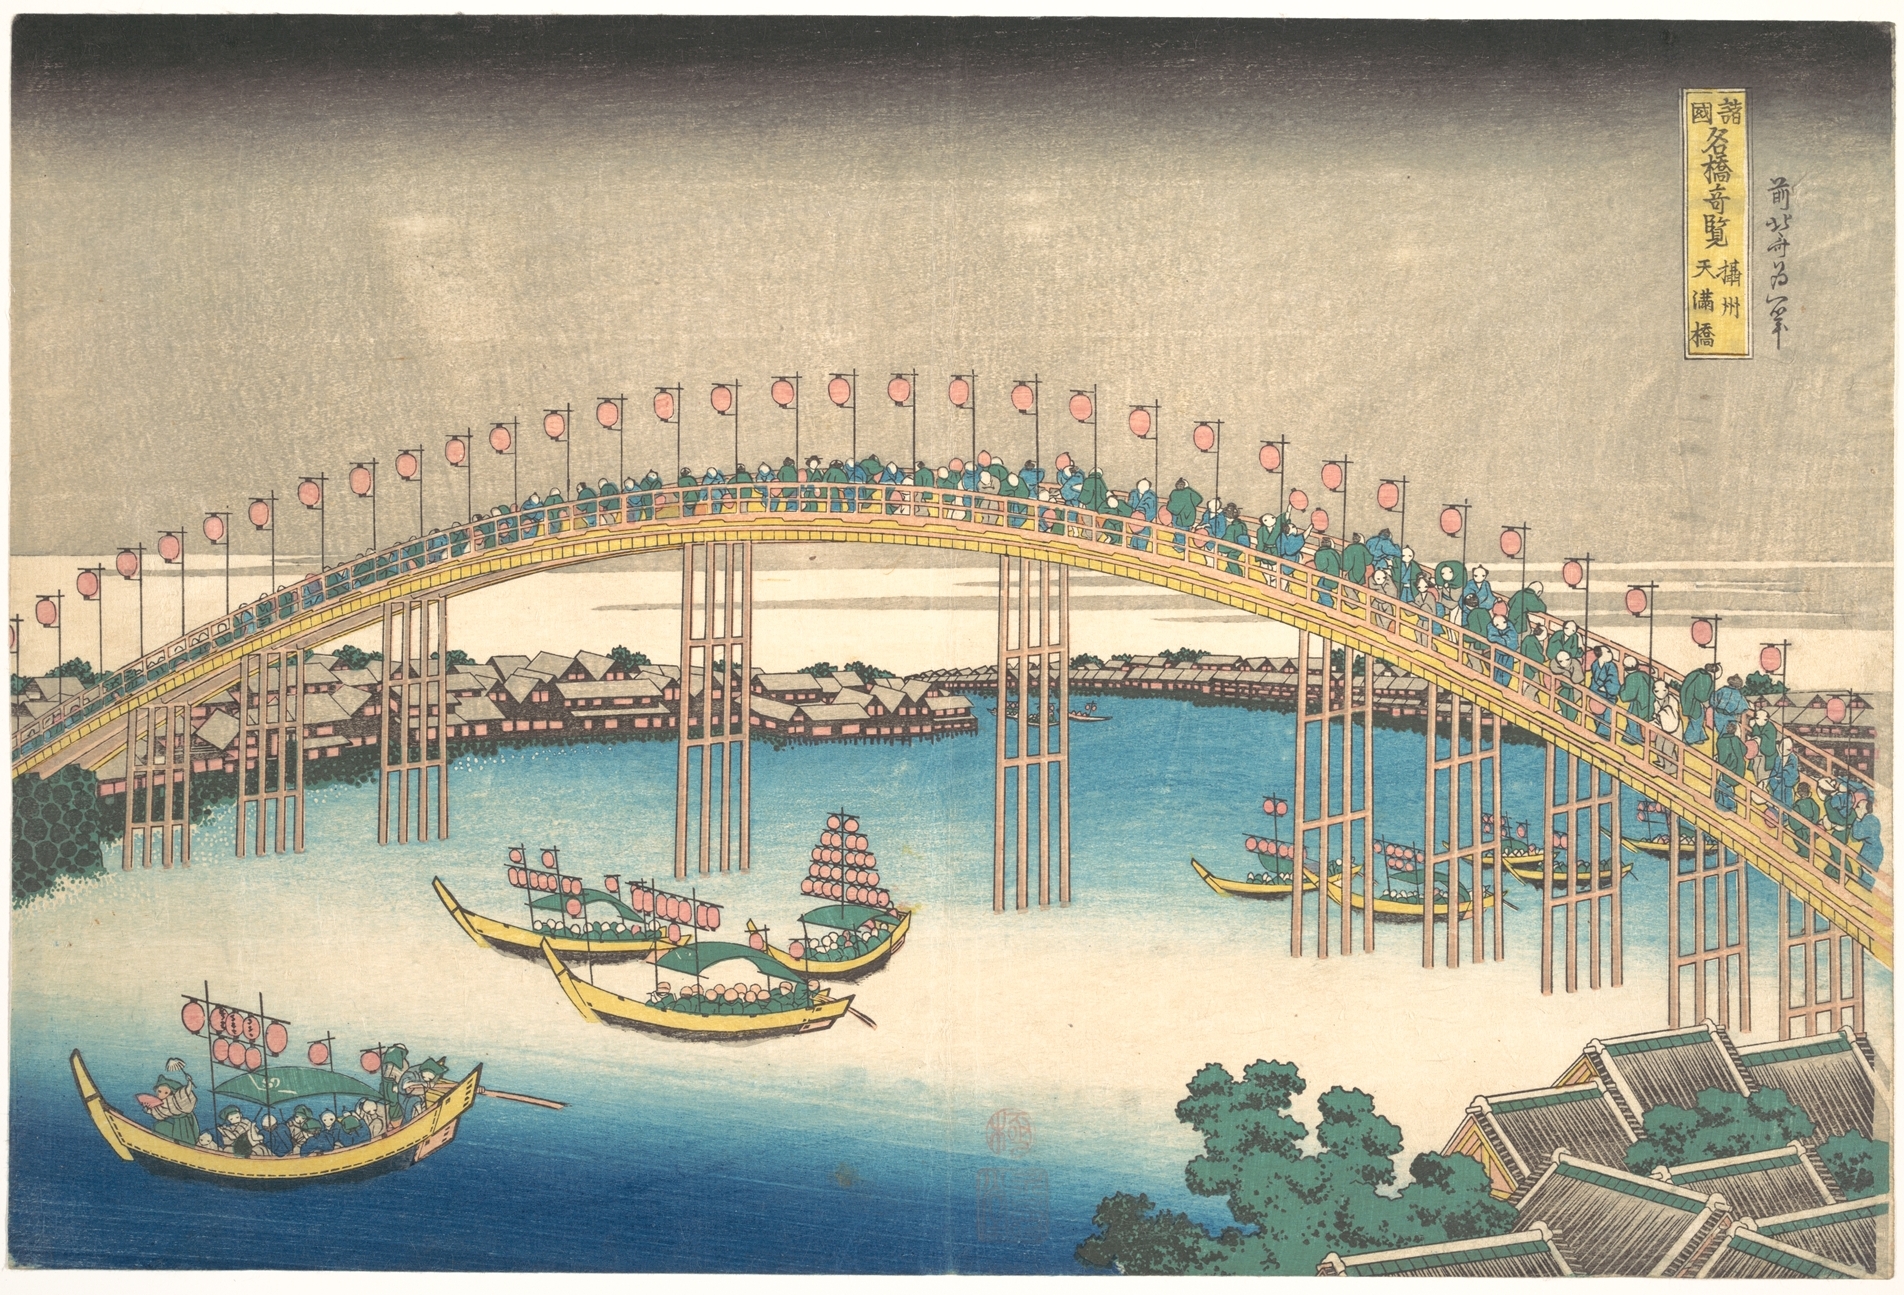 摂州天満橋 by Katsushika Hokusai - 1834年頃 - 24.5 x 36.9 cm 